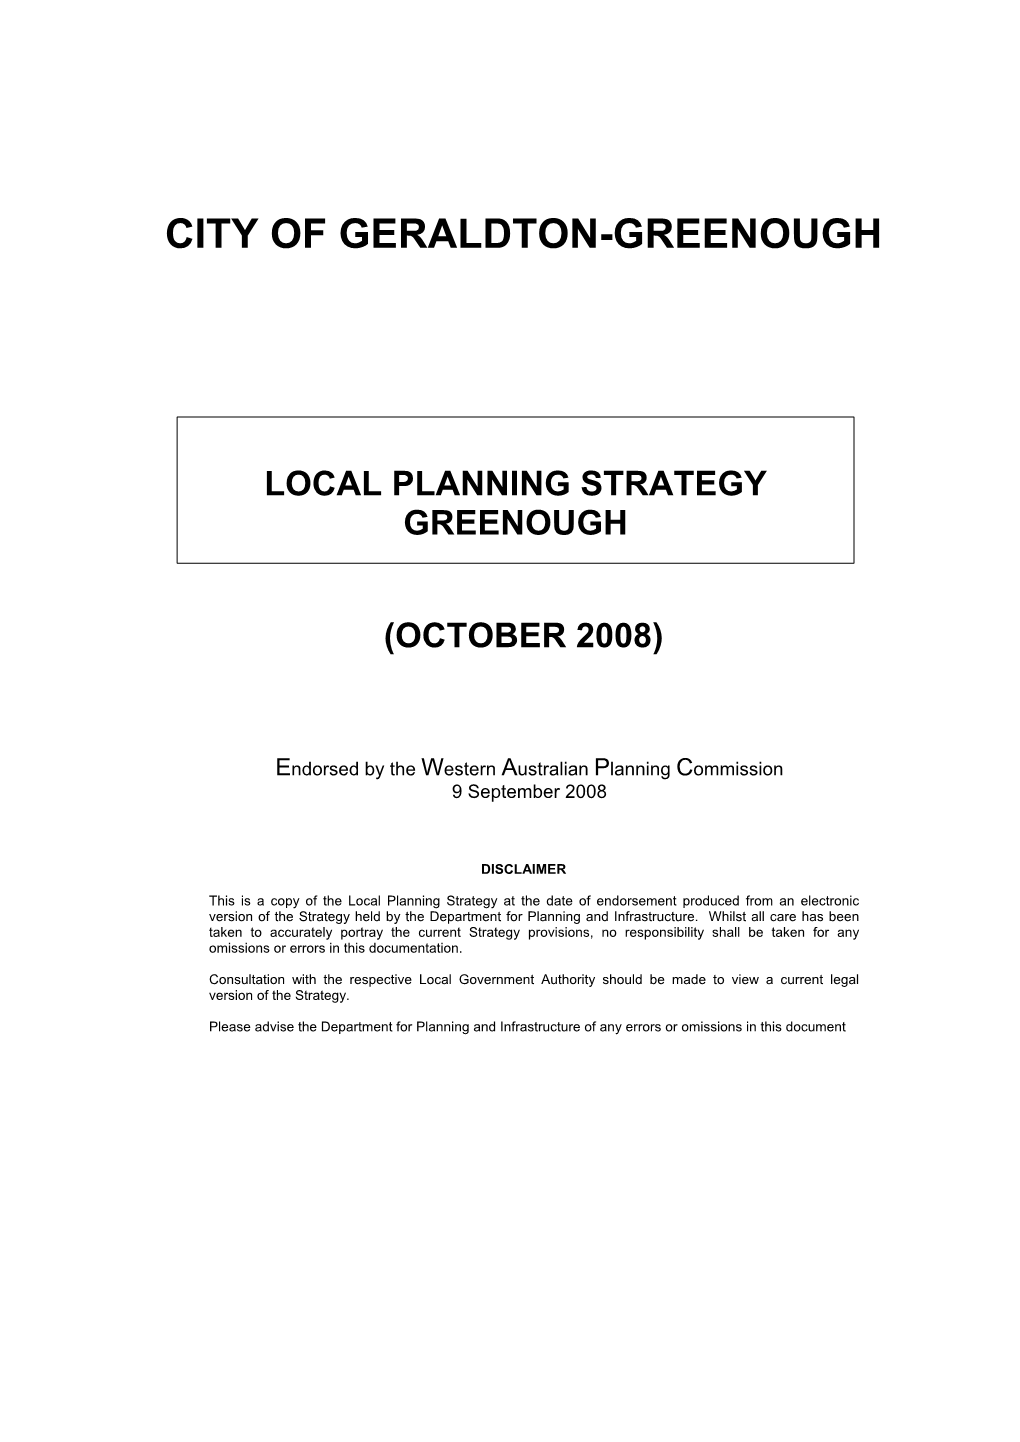 City of Geraldton-Greenough